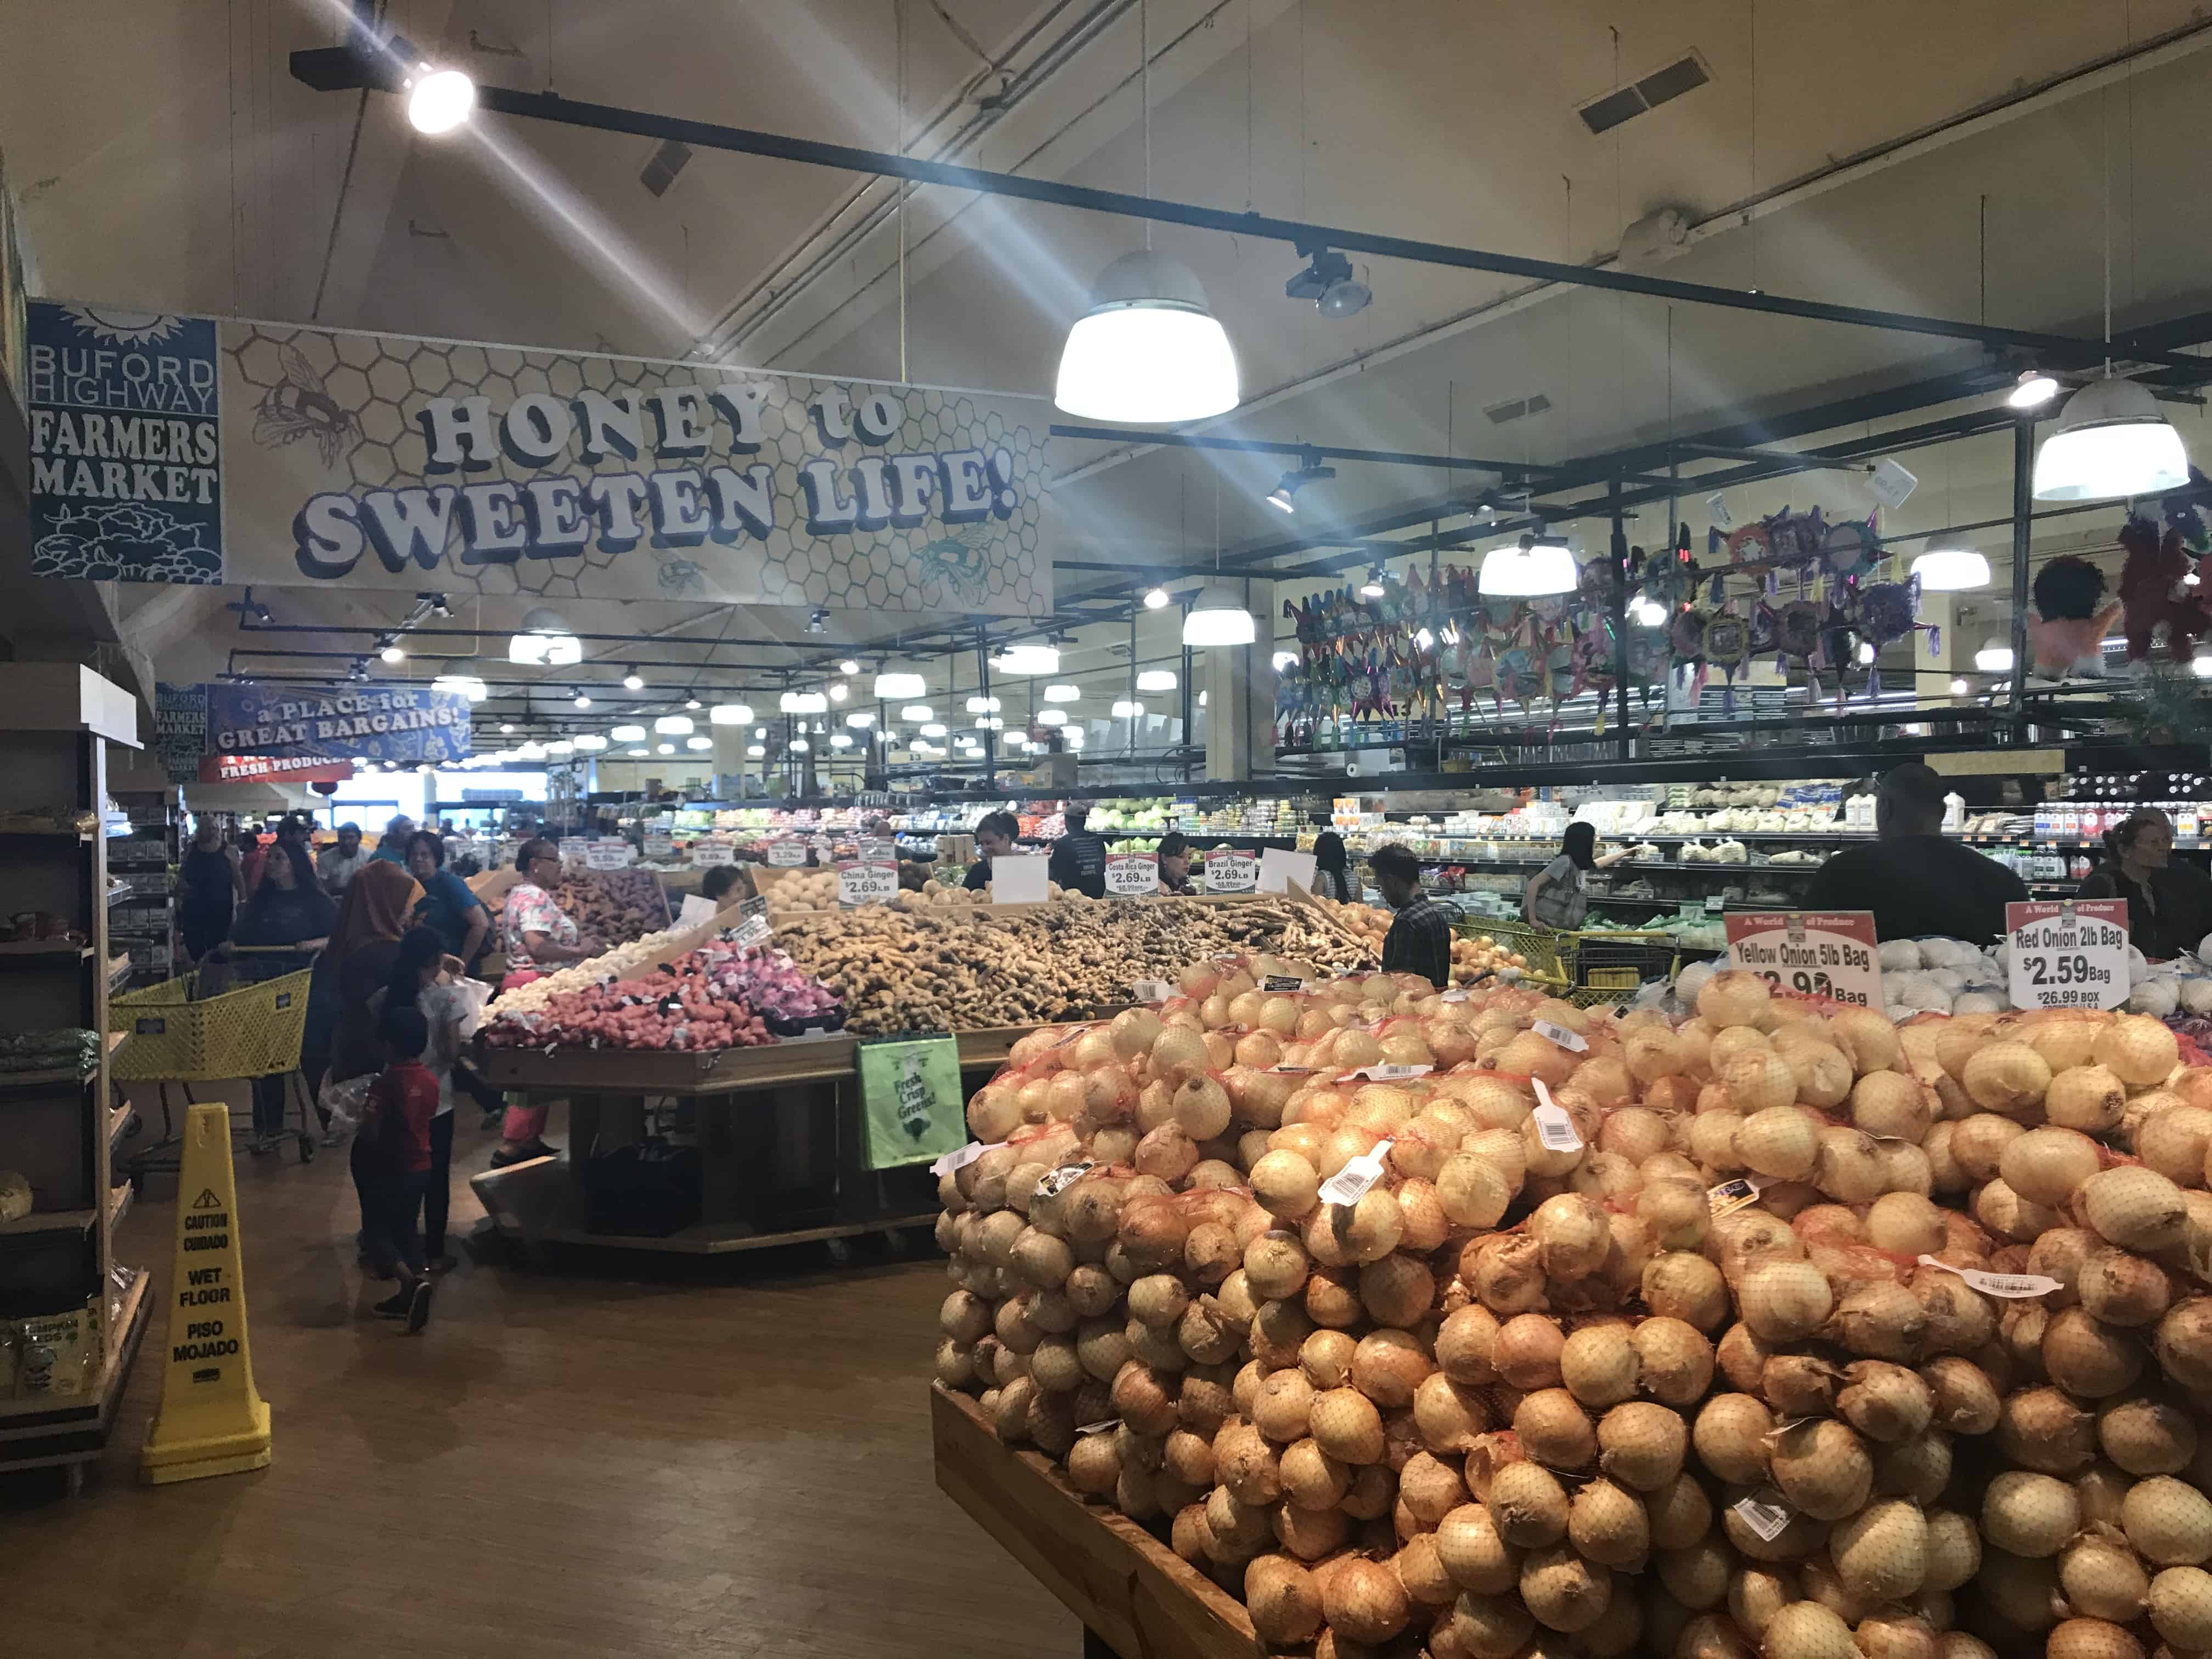 Buford Highway Farmers Market Produce